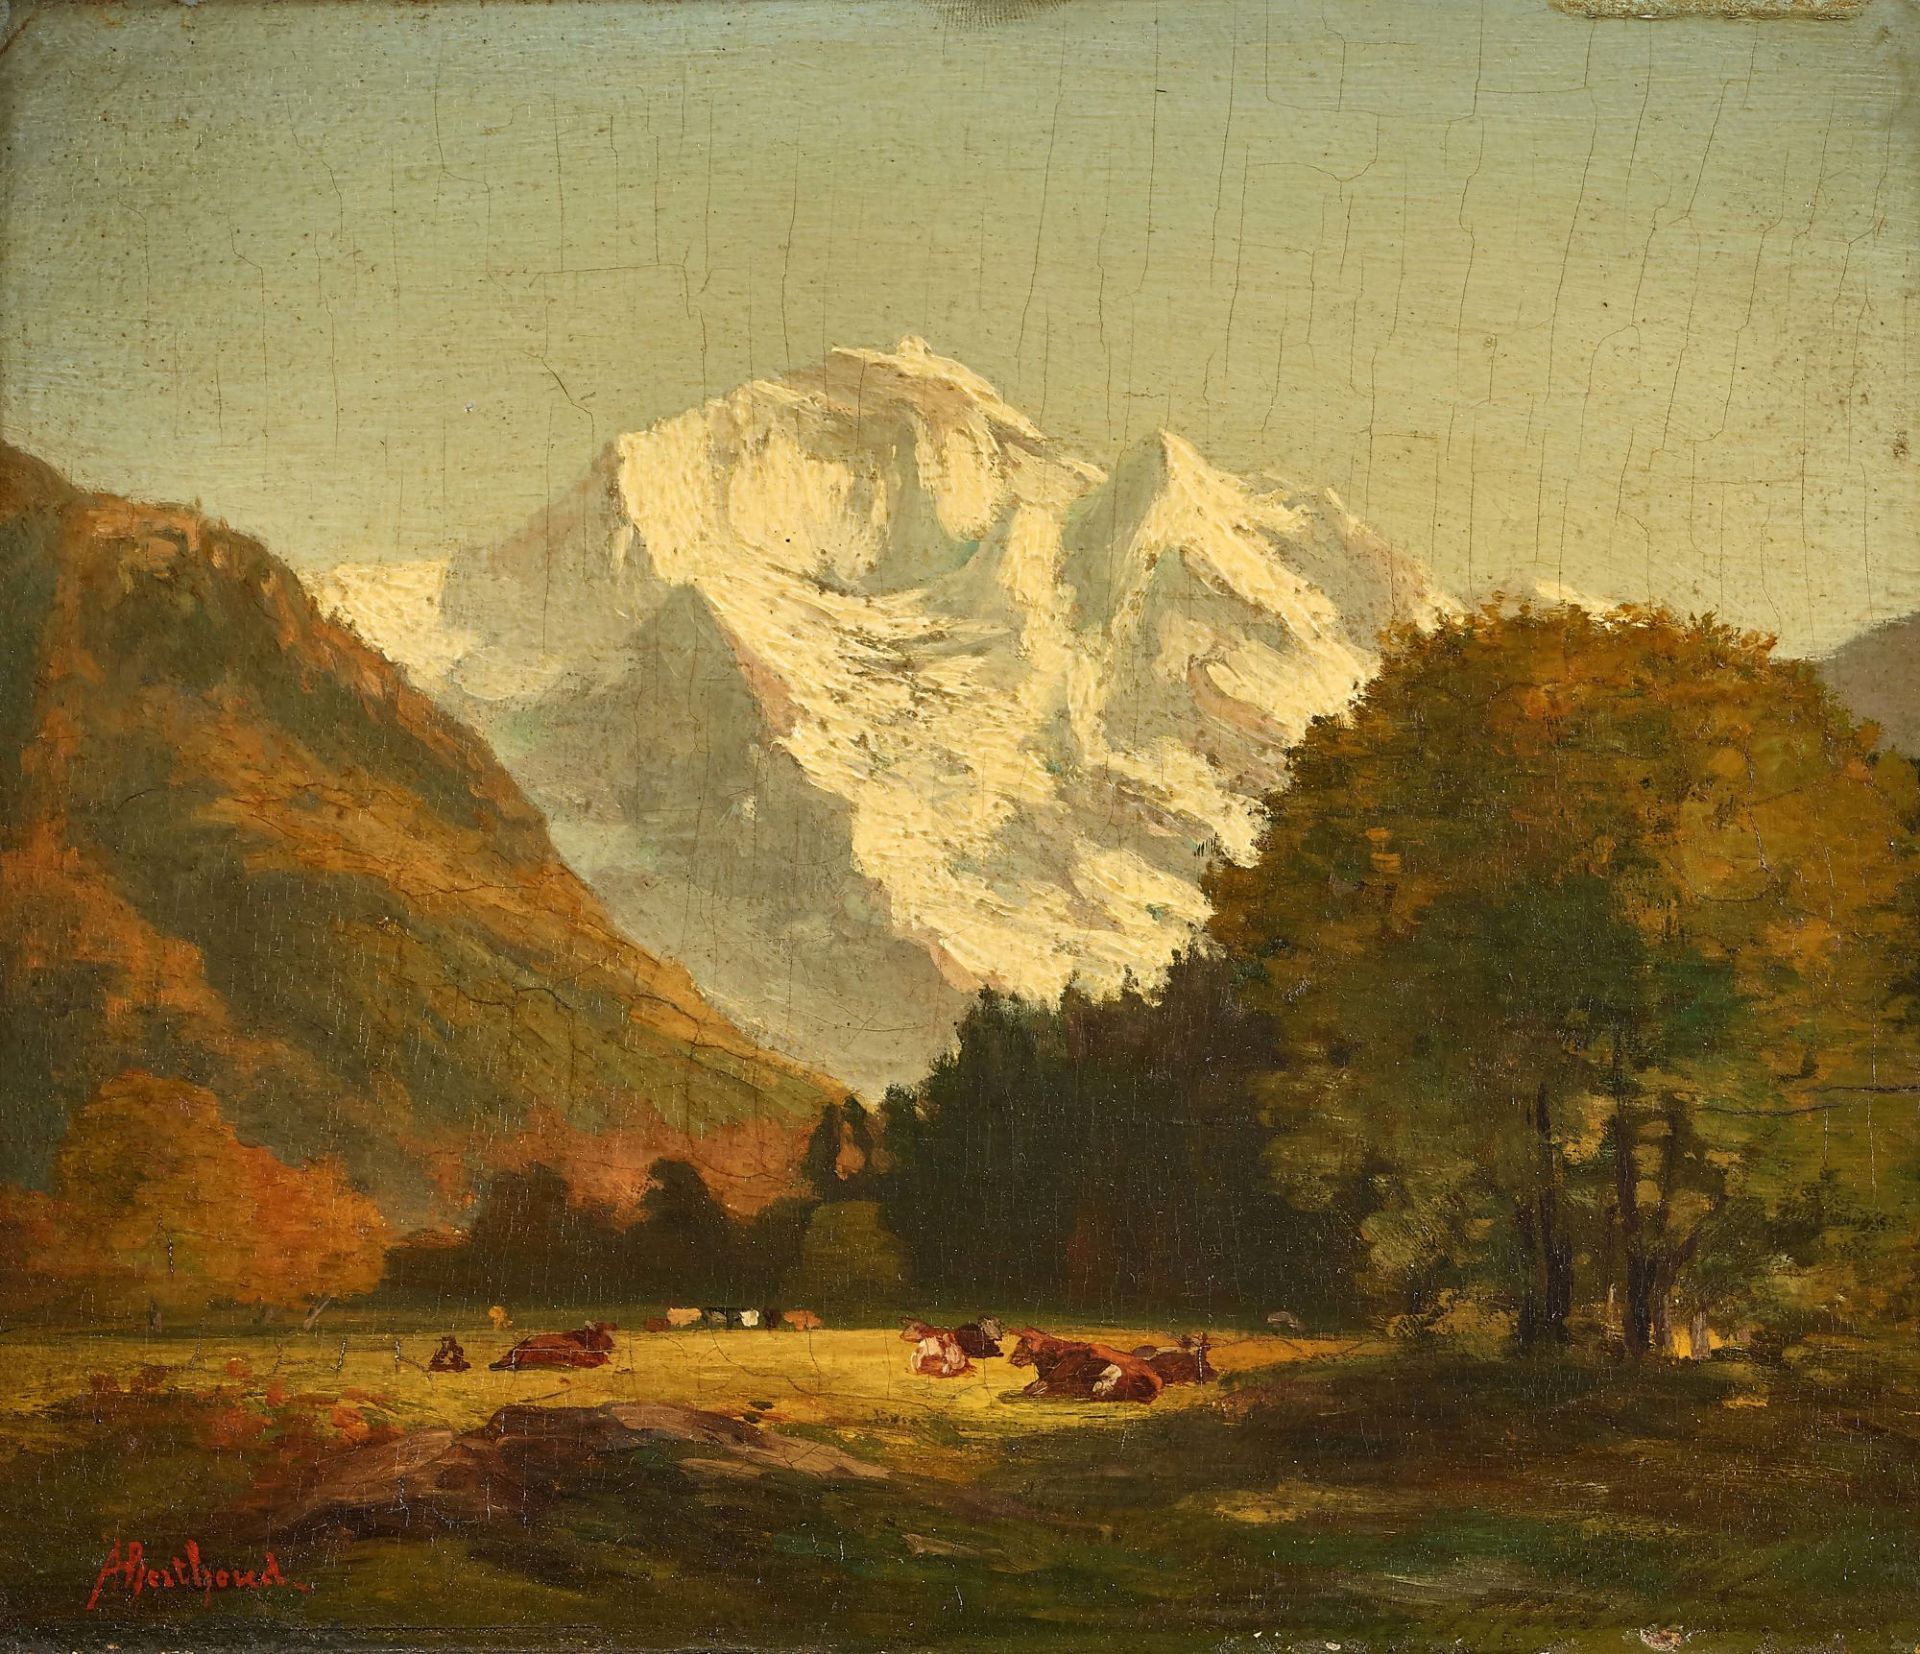 BERTHOUD, AUGUSTE HENRI: "La Jungfrau".